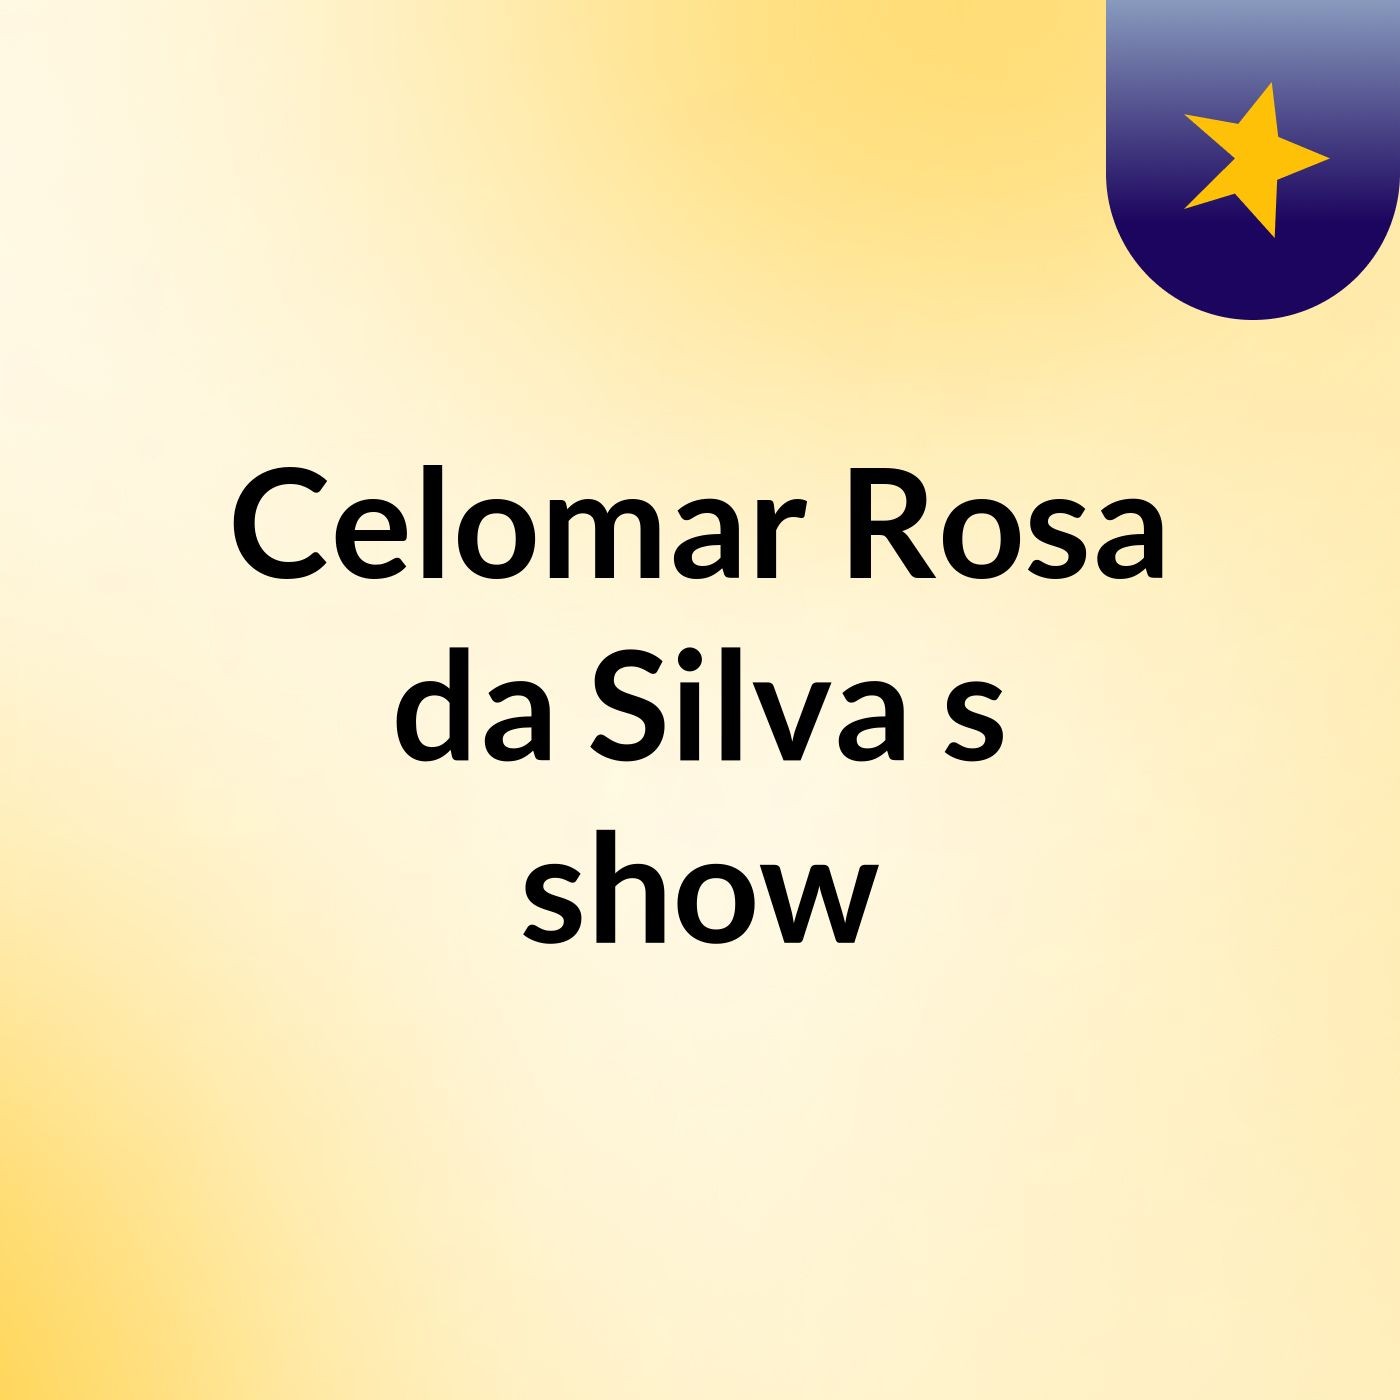 Celomar Rosa da Silva's show